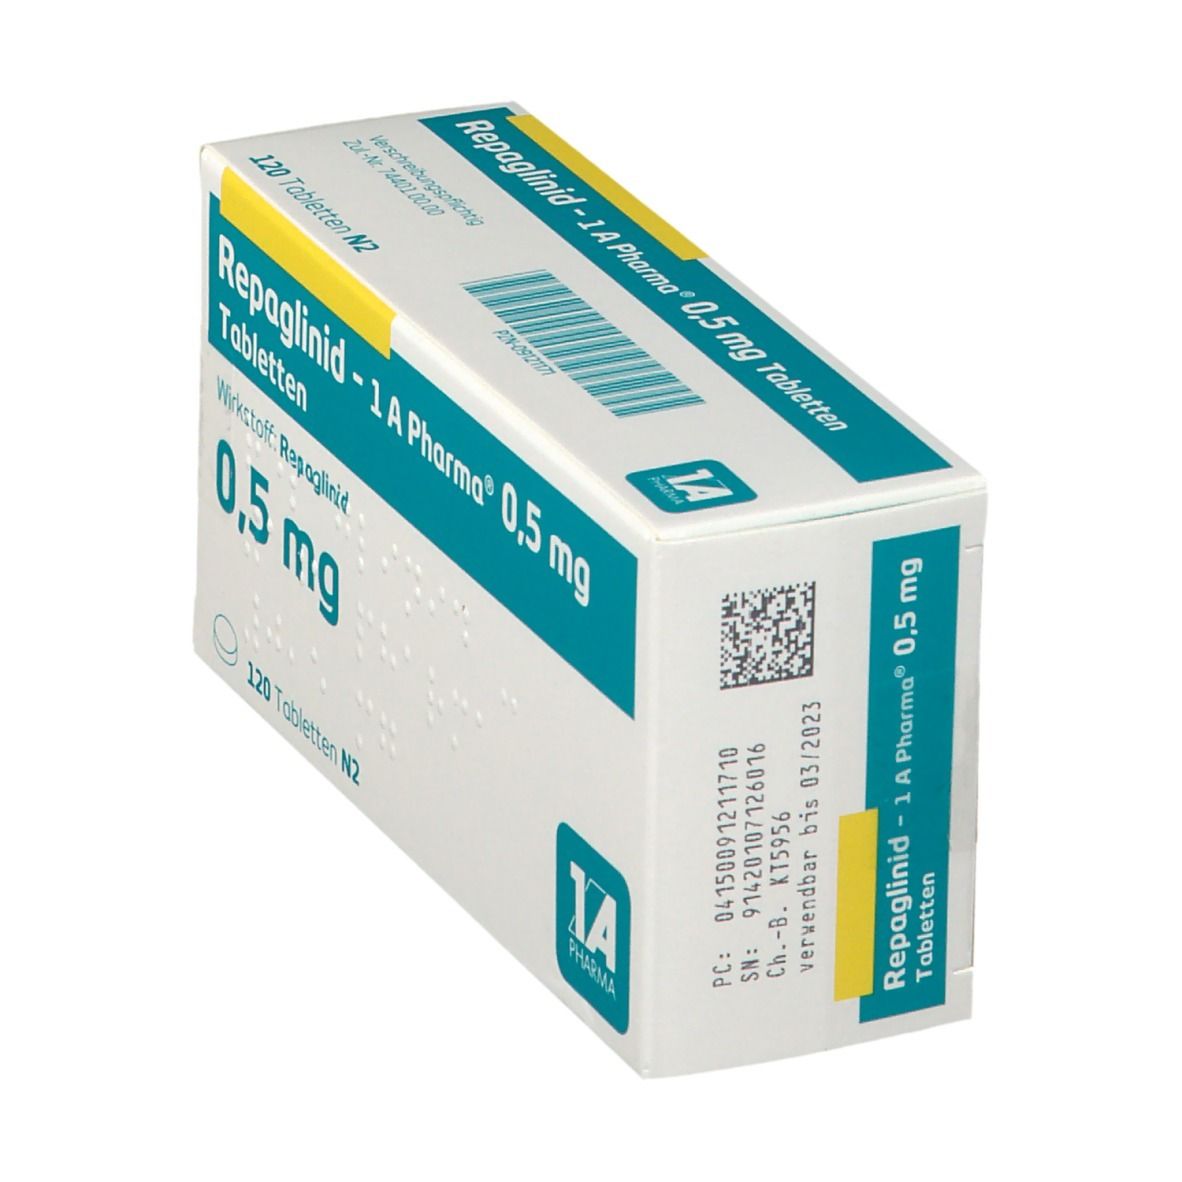 Repaglinid - 1 A Pharma® 0,5 mg